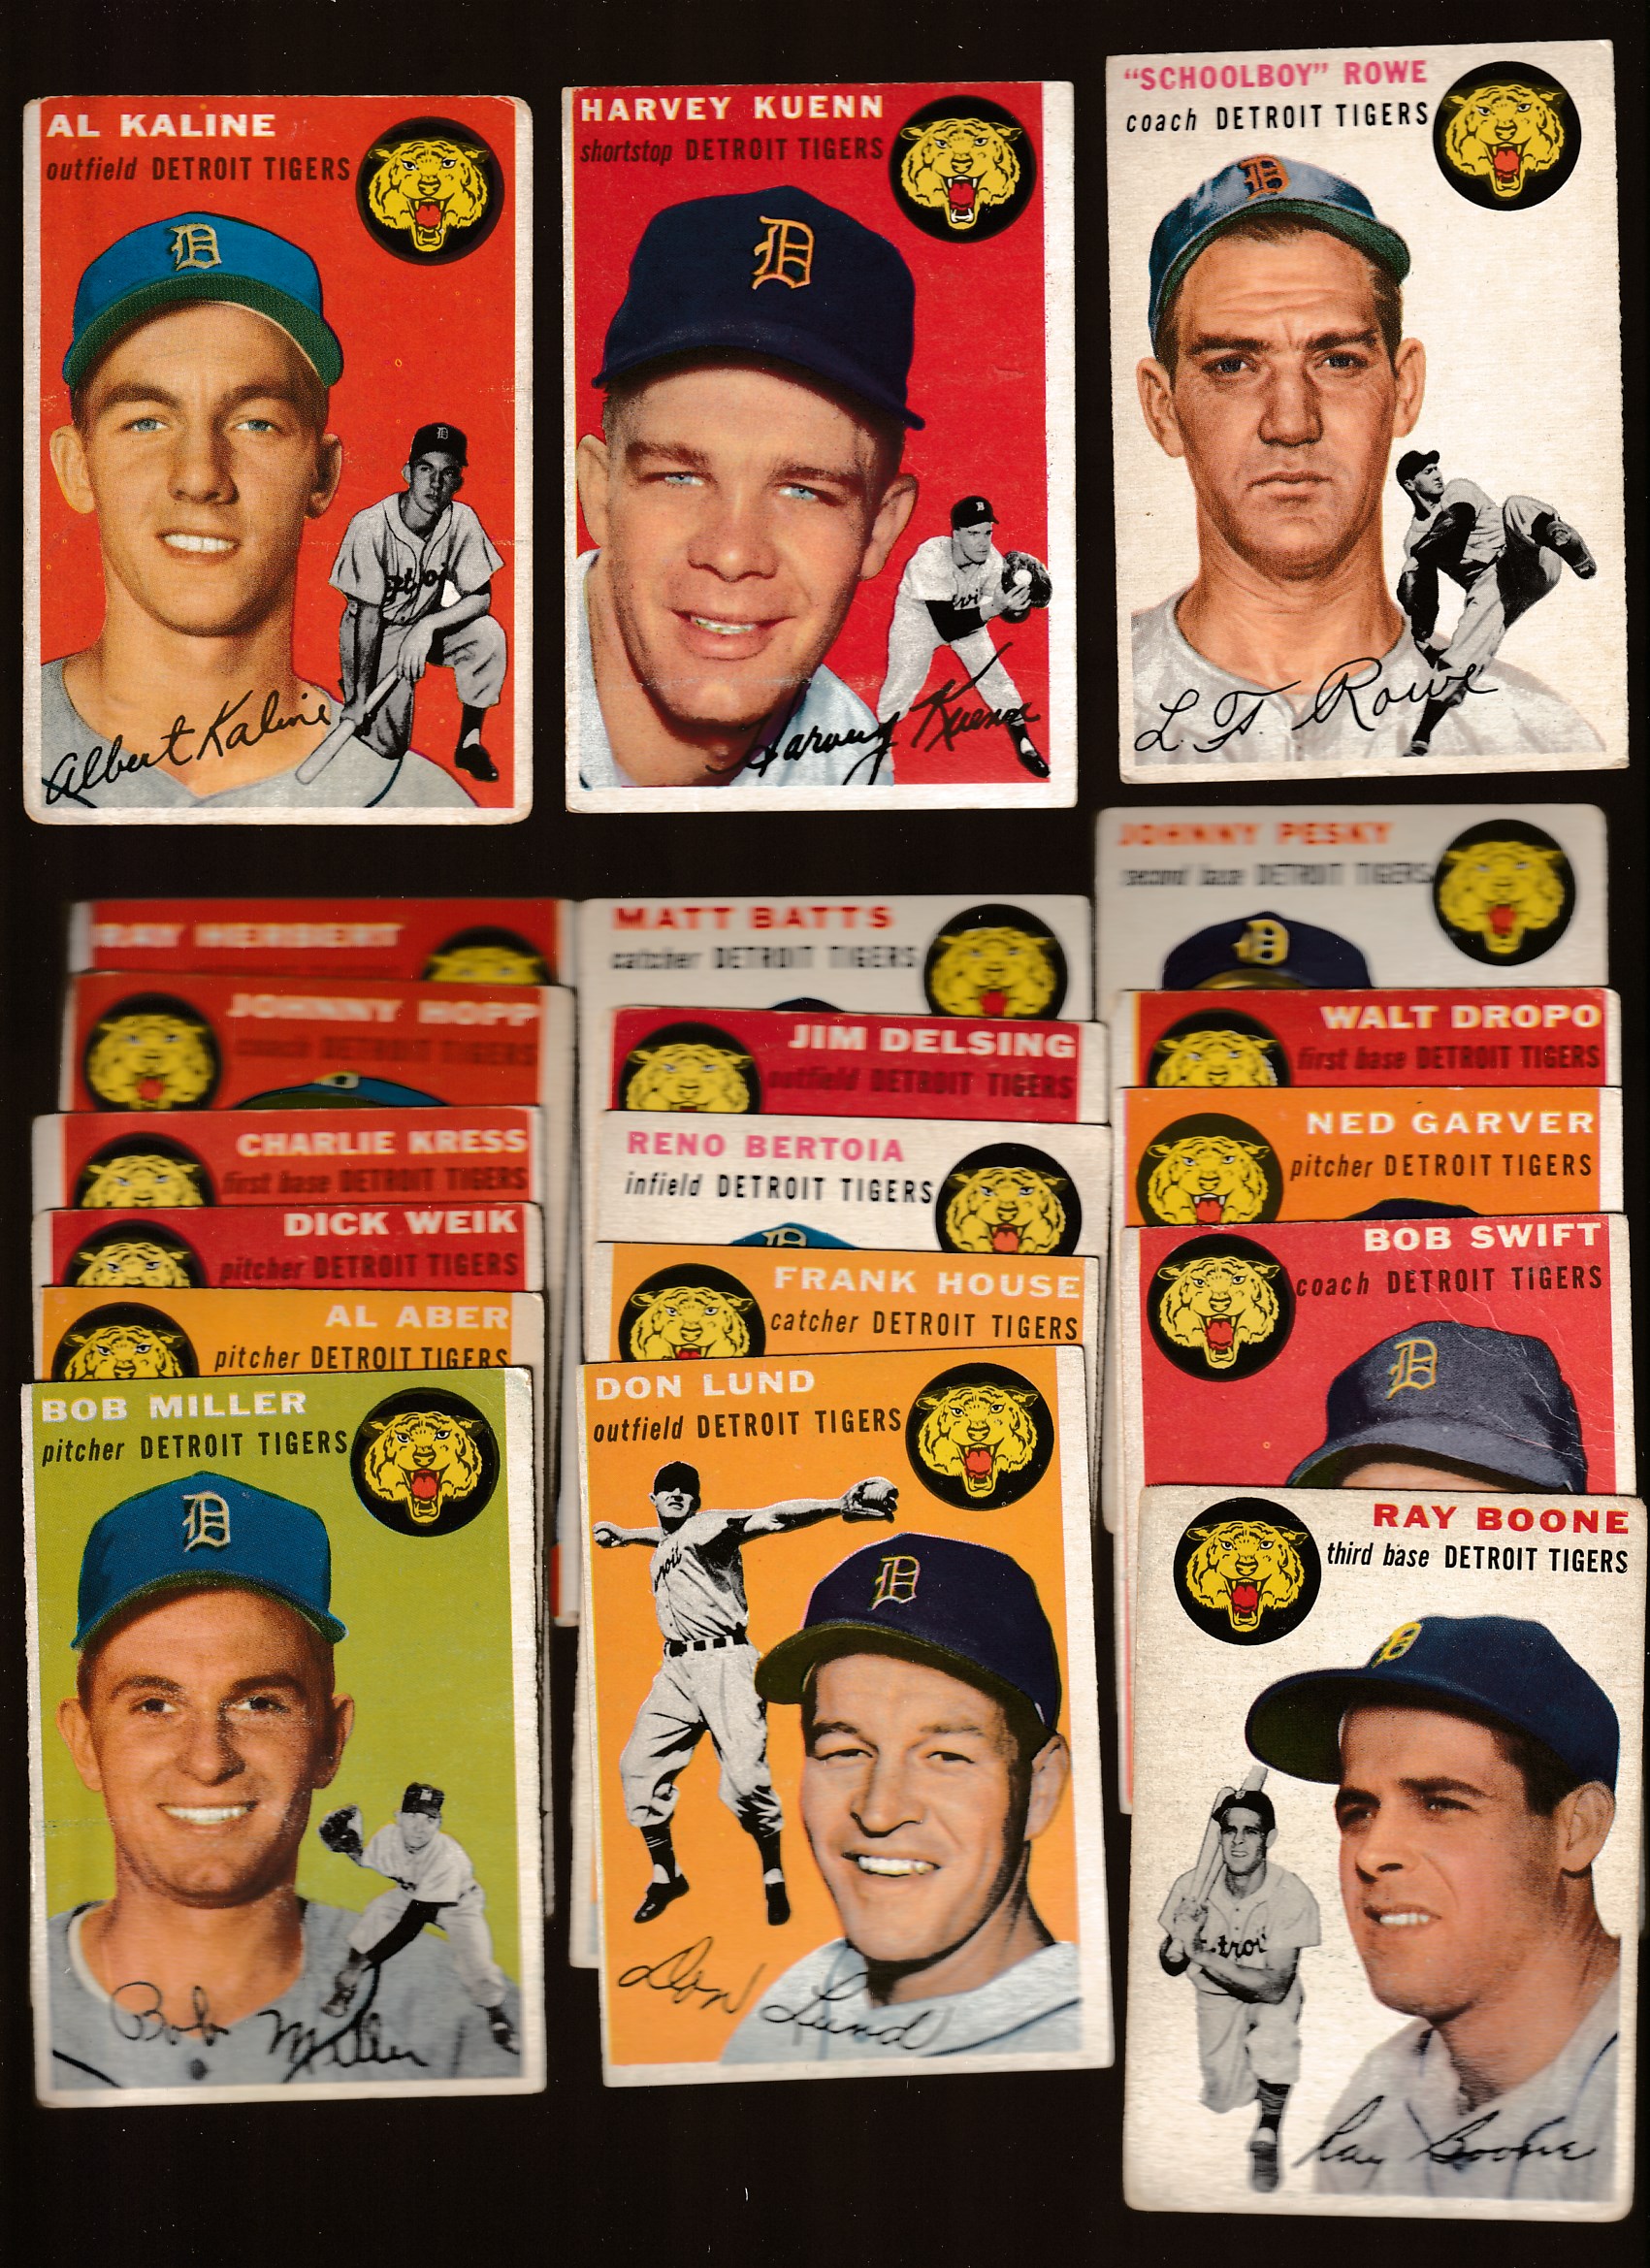  Detroit Tigers - 1954 Topps COMPLETE TEAM SET w/AL KALINE ROOKIE(19 cards) Baseball cards value